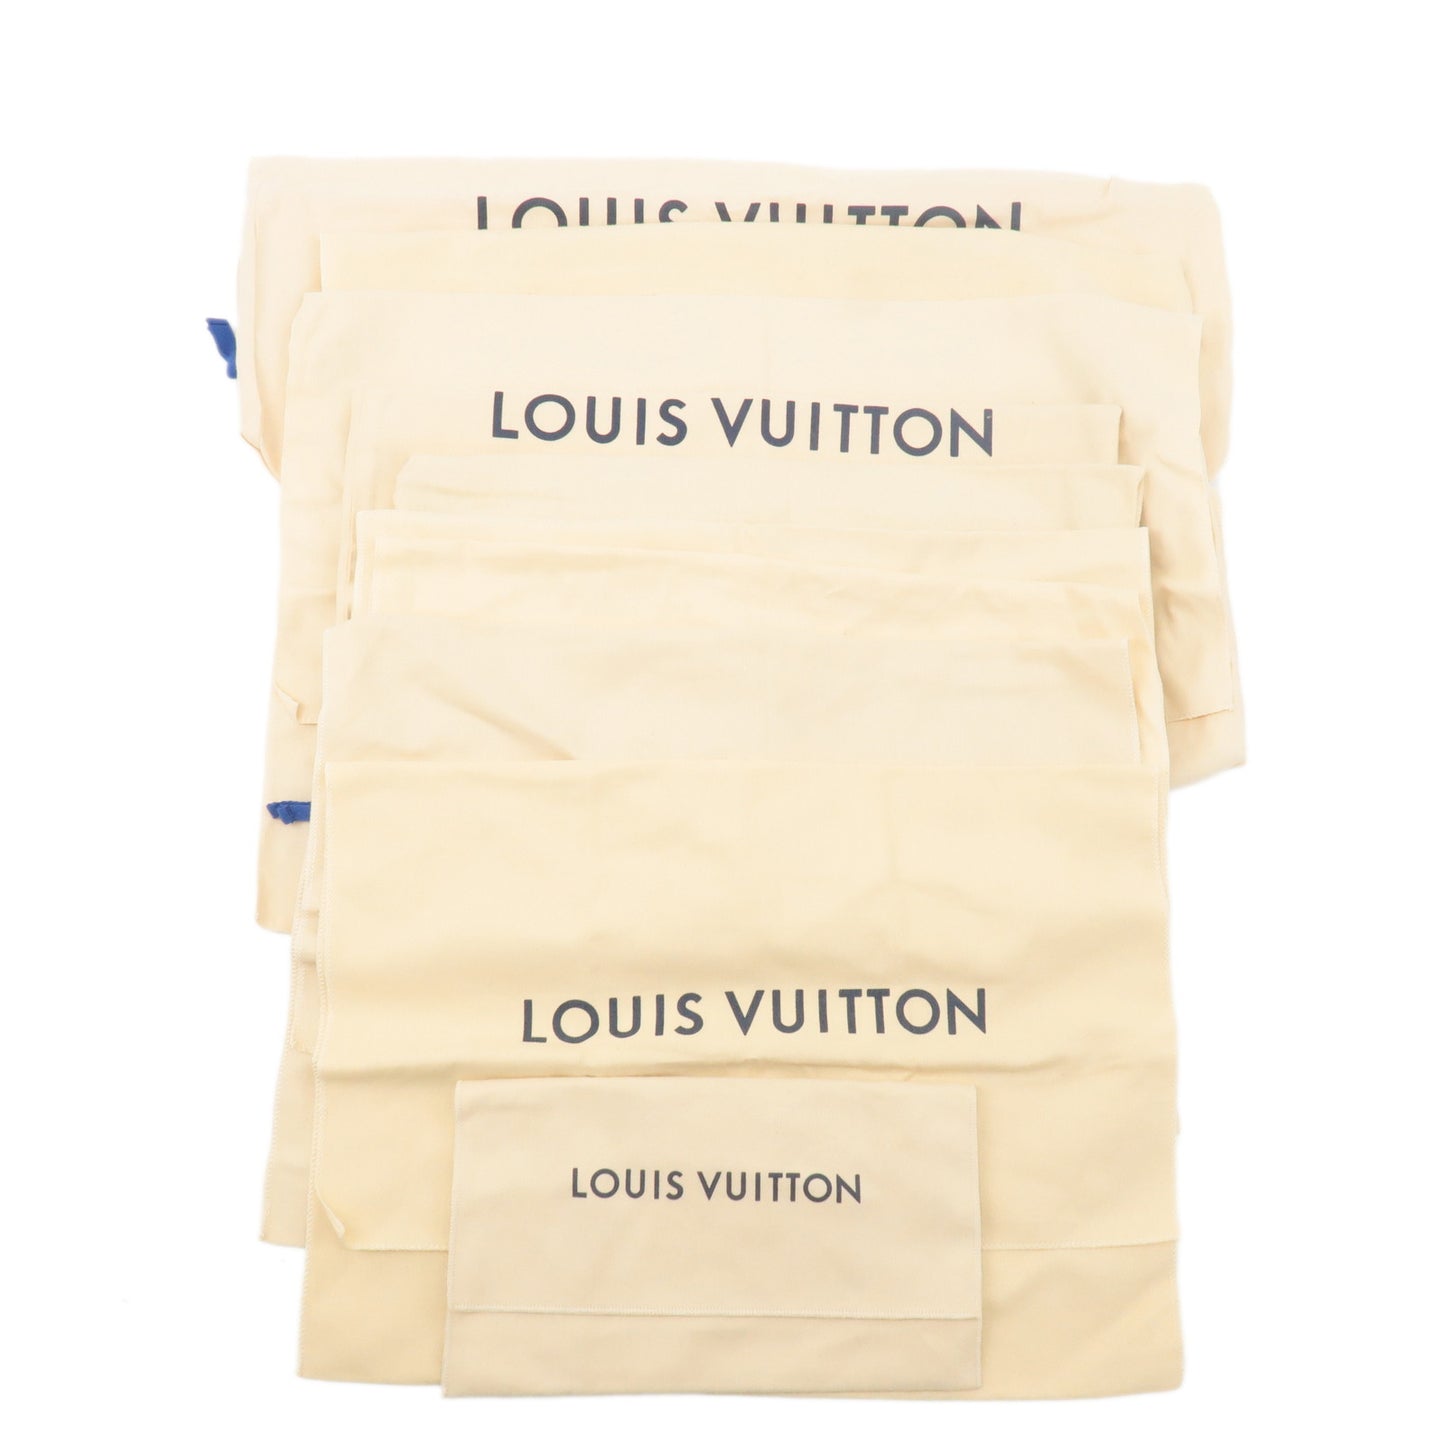 Louis-Vuitton-Set-of-10-Dust-Bag-Storage-Bag-New-Style-Beige